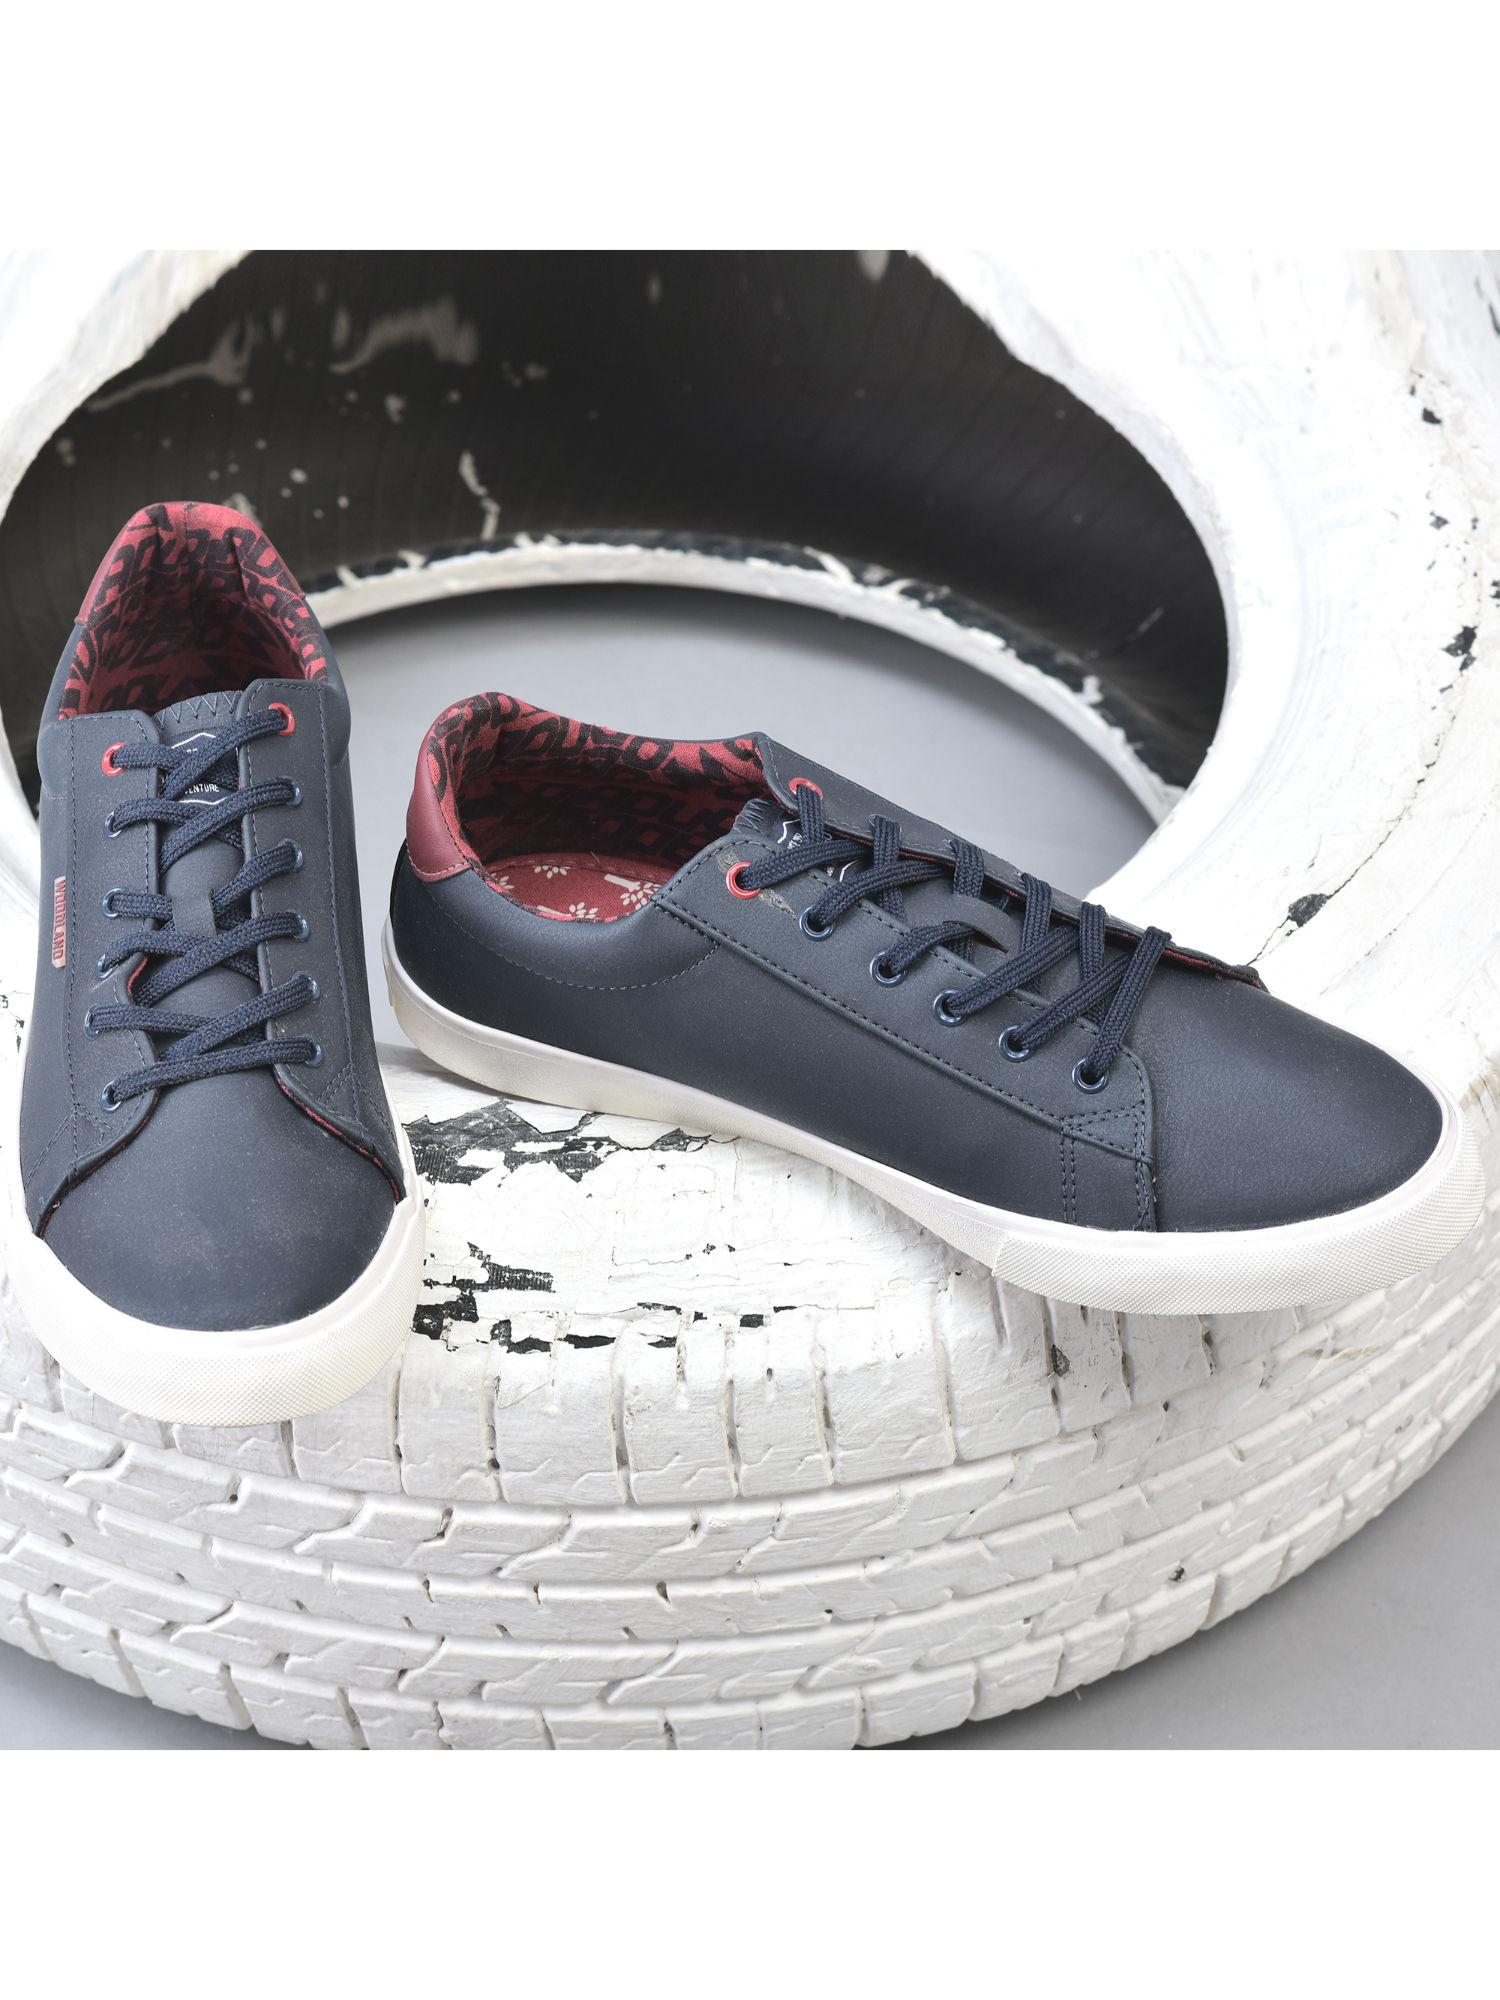 mens-grey-canvas-shoes